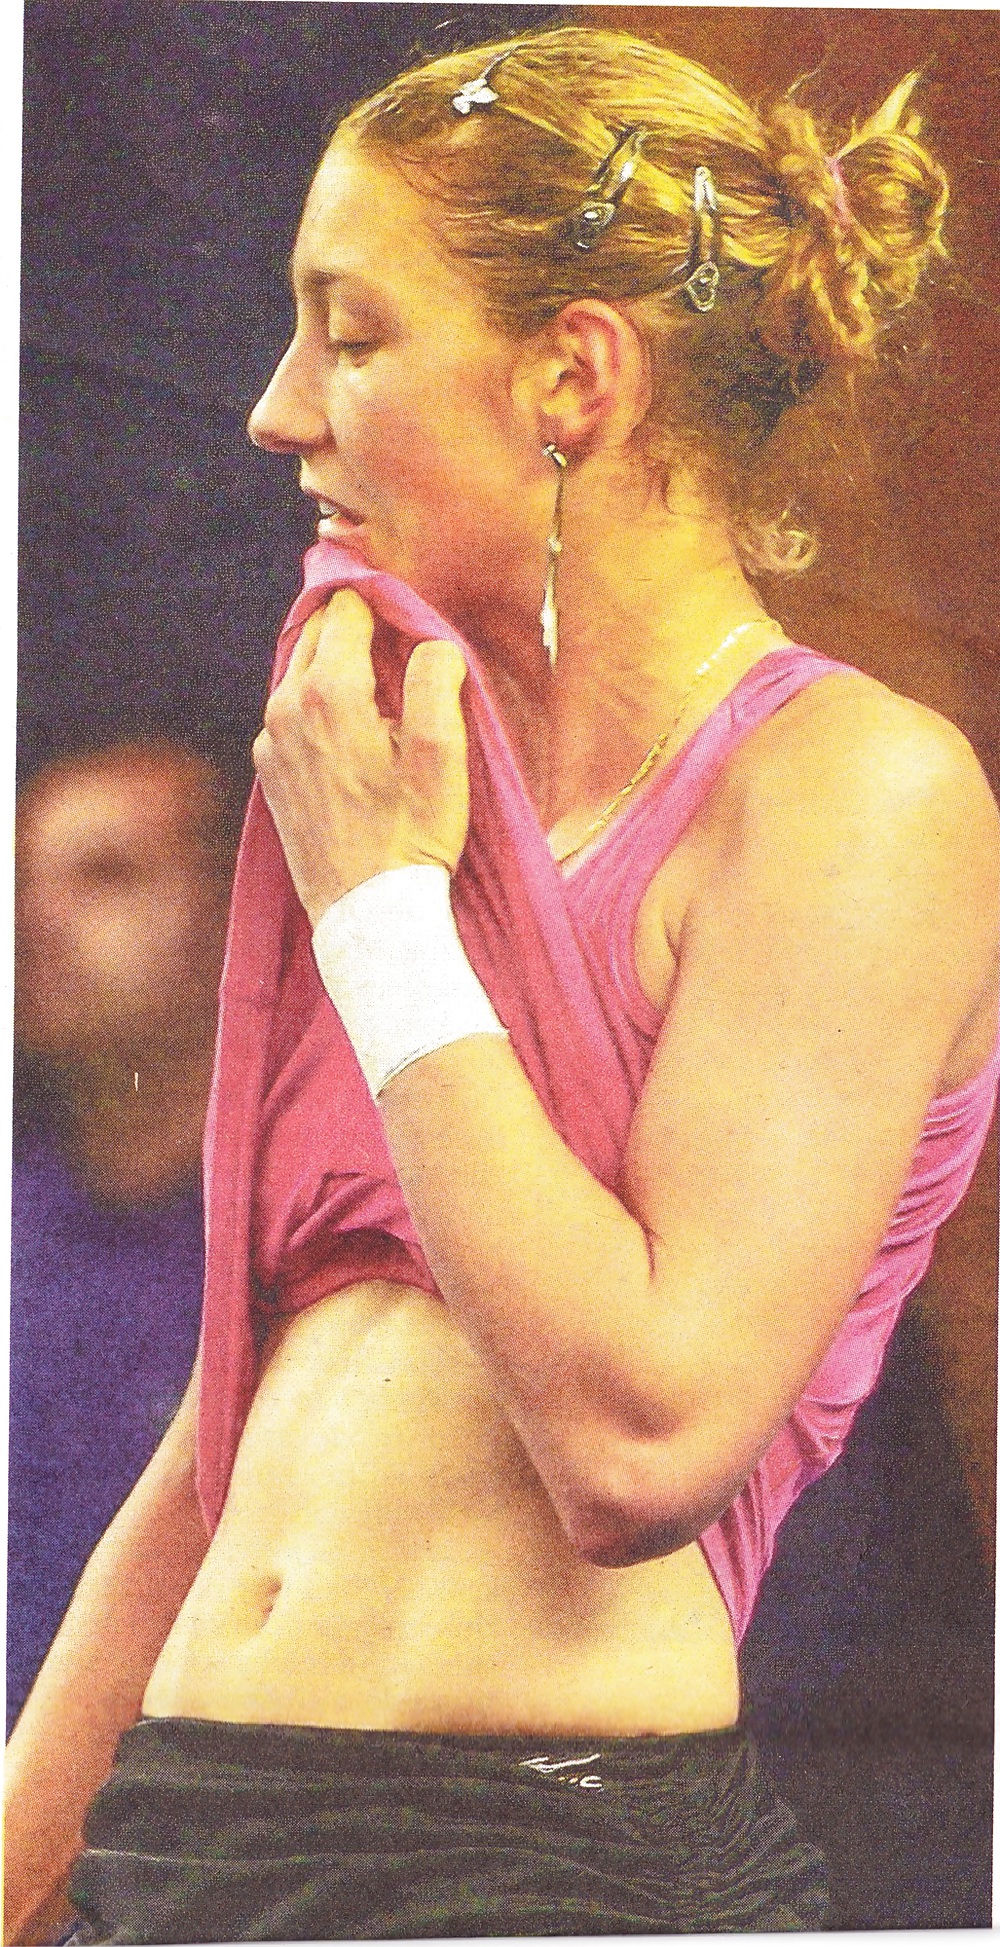 Belgian tennis babe - Yanina Wickmayer #4277838